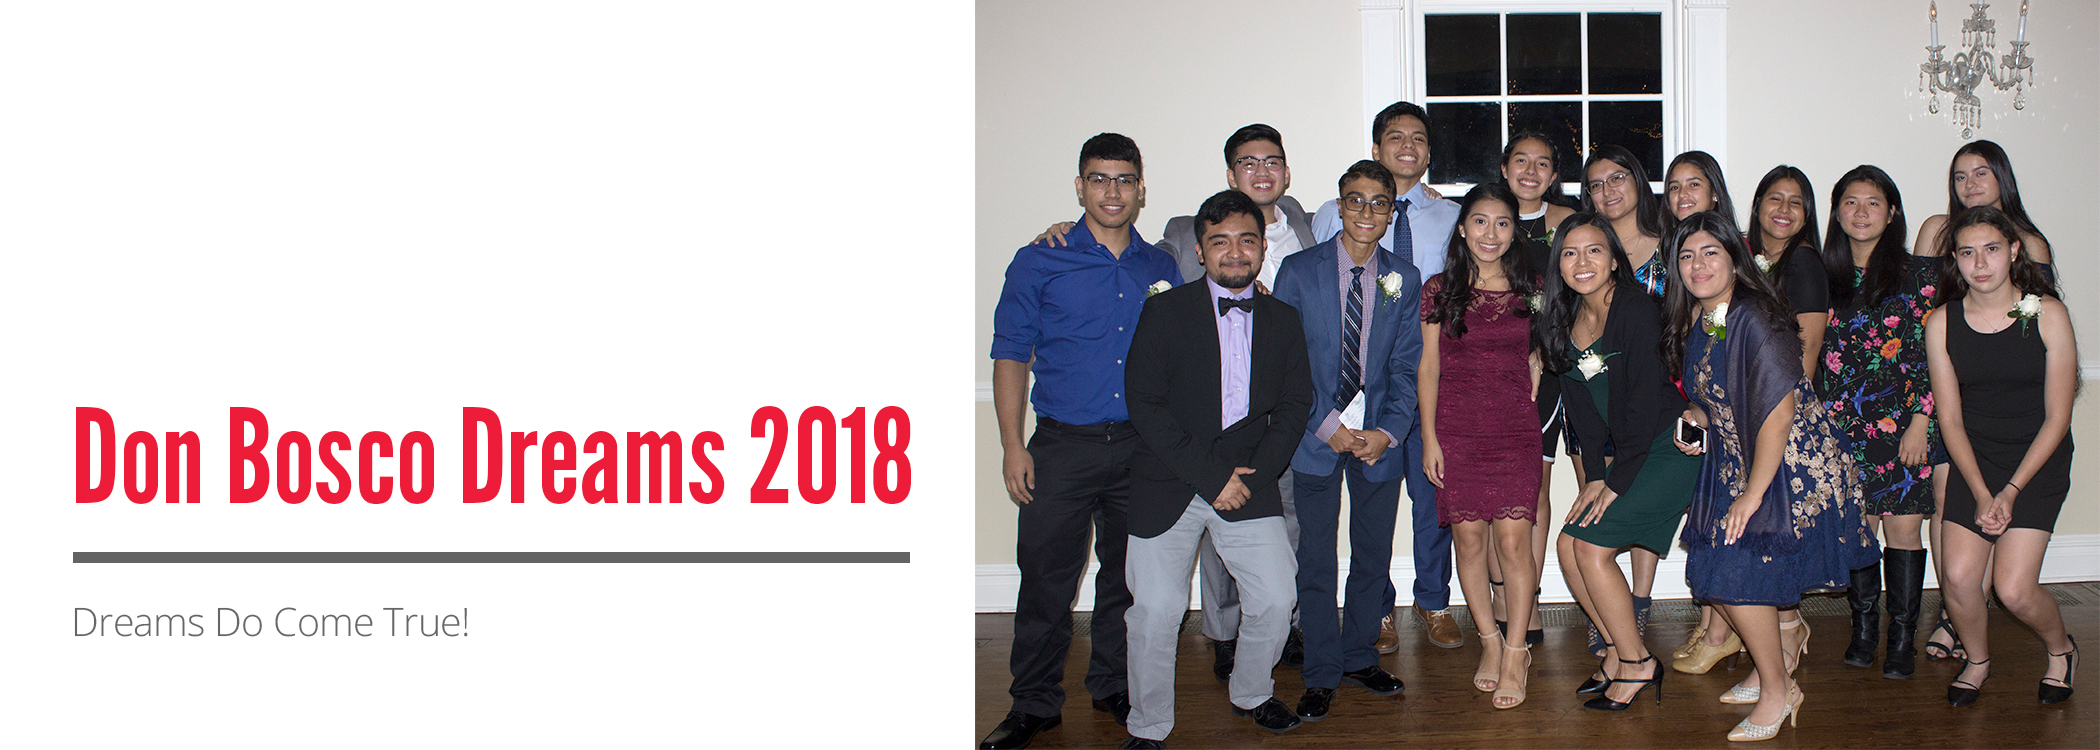 Don Bosco Dreams 2018 | Dreams Do Come True!